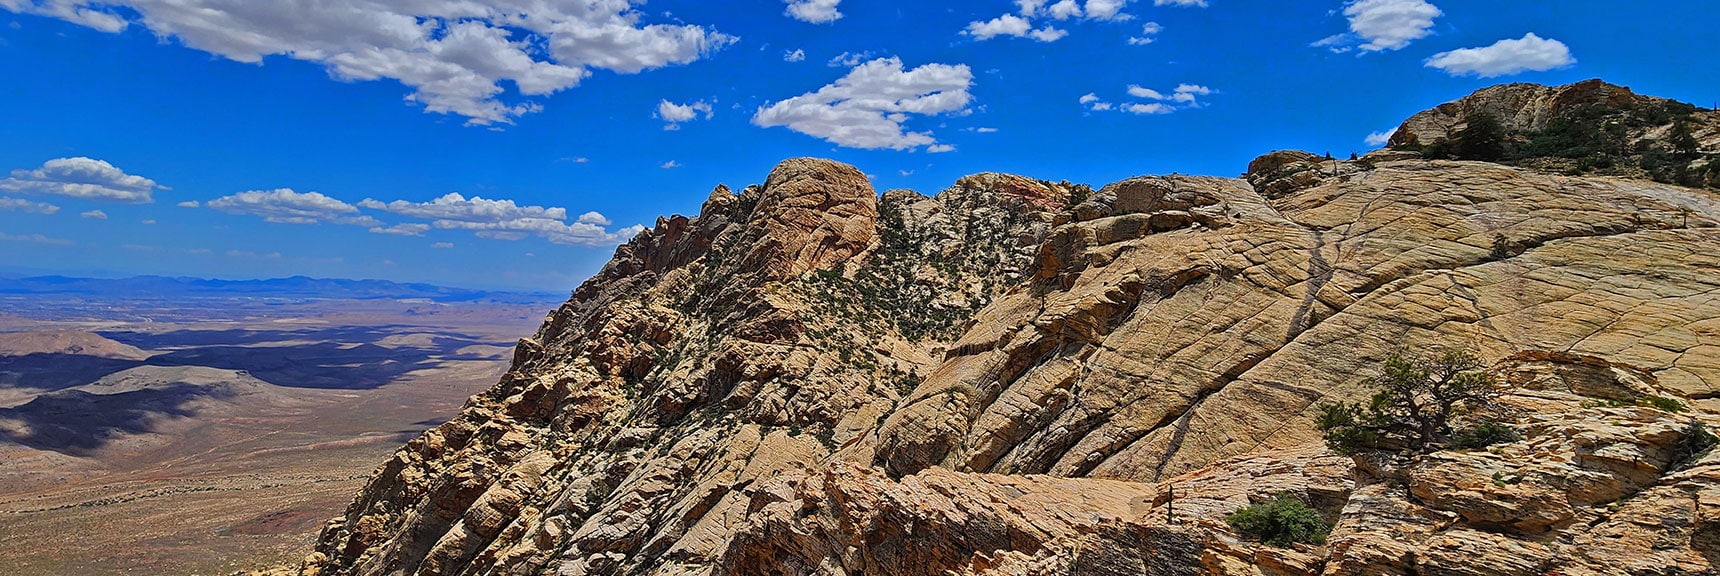 Monument Peak from Eastern Tip of Little Zion Plateau | Little Zion | Rainbow Mountain Wilderness, Nevada